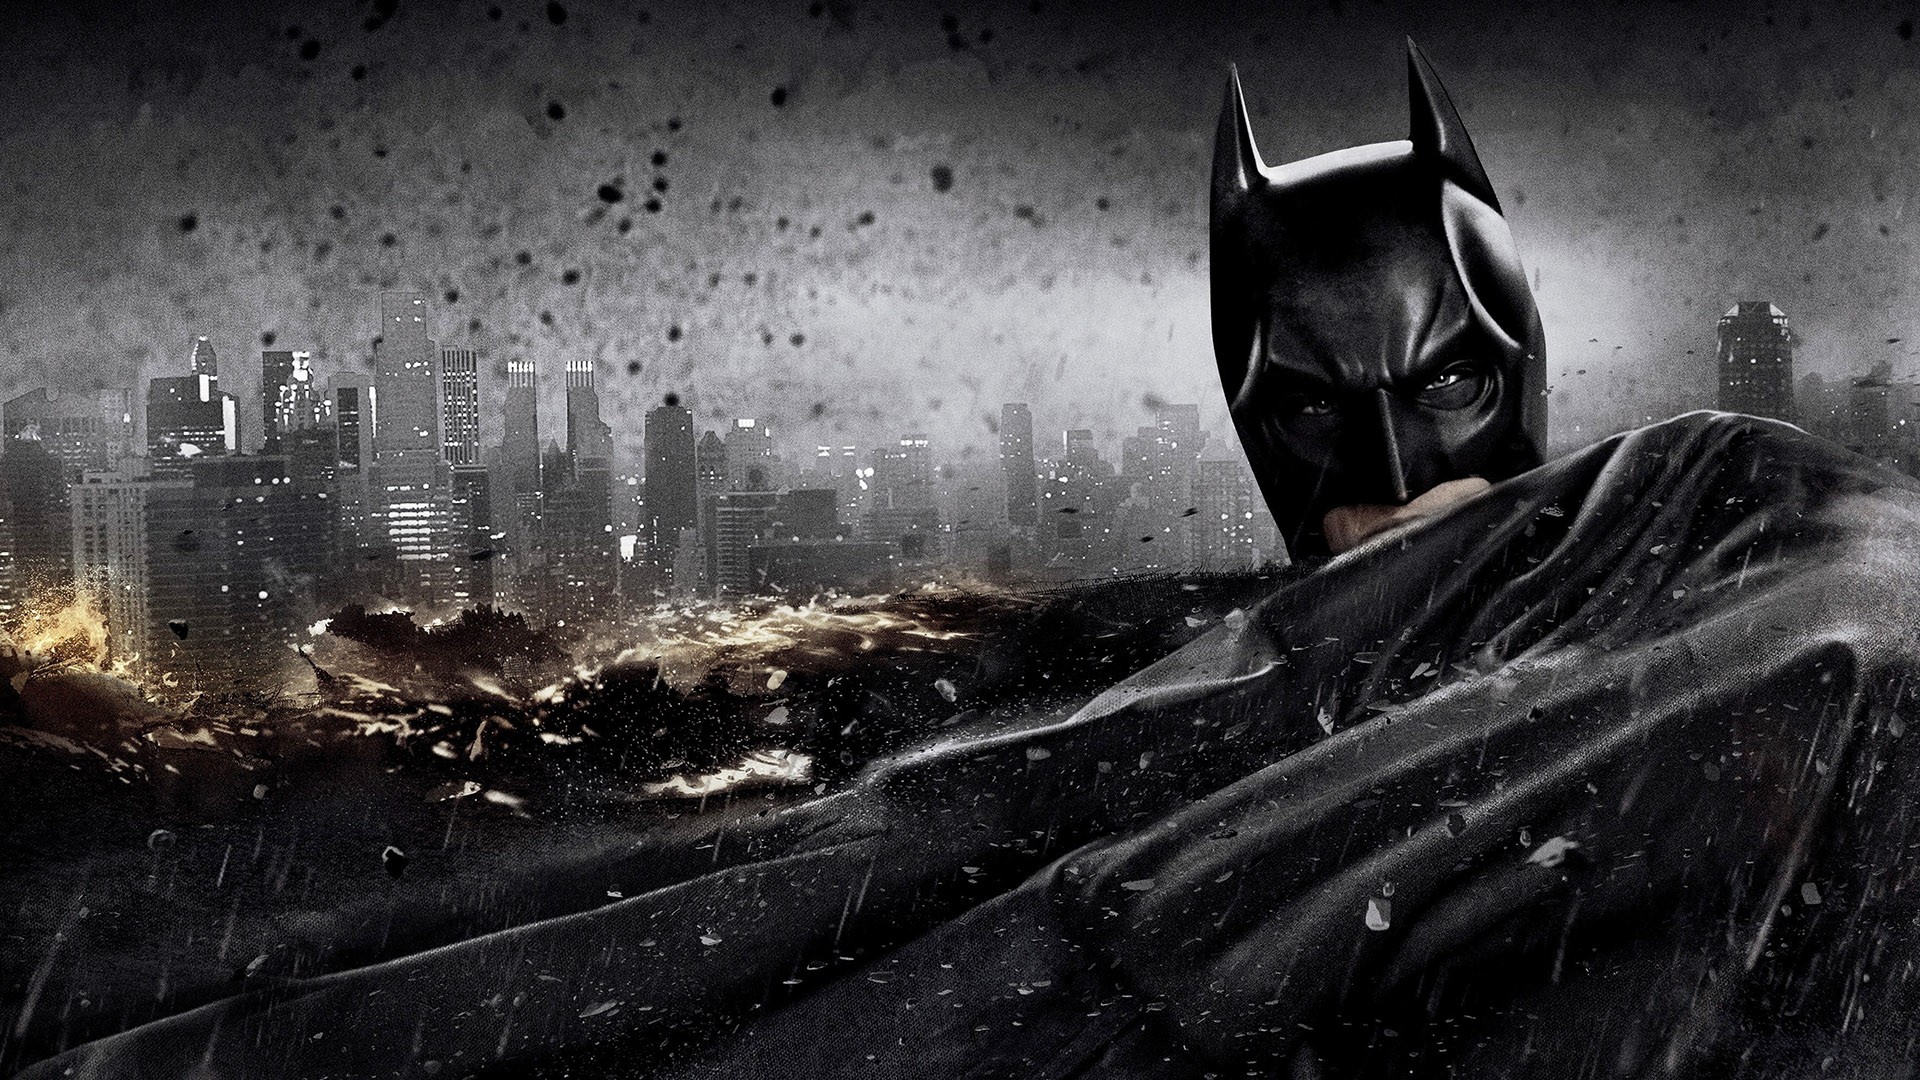 General 1920x1080 Batman The Dark Knight Rises Christopher Nolan Christian Bale movies hero actor superhero DC Comics